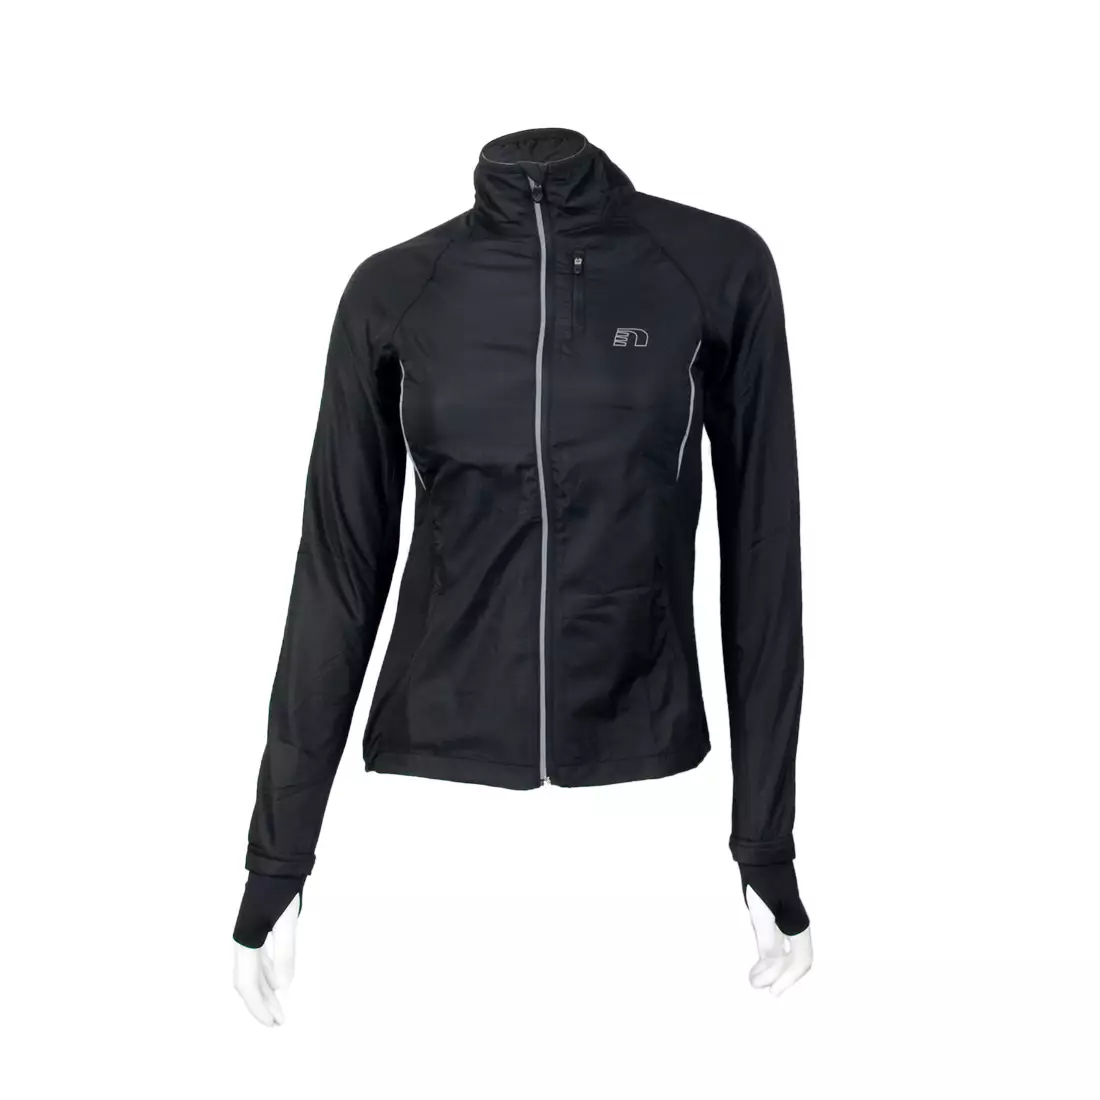 NEWLINE BASE CROSS JACKET - women's running jacket 13089-060